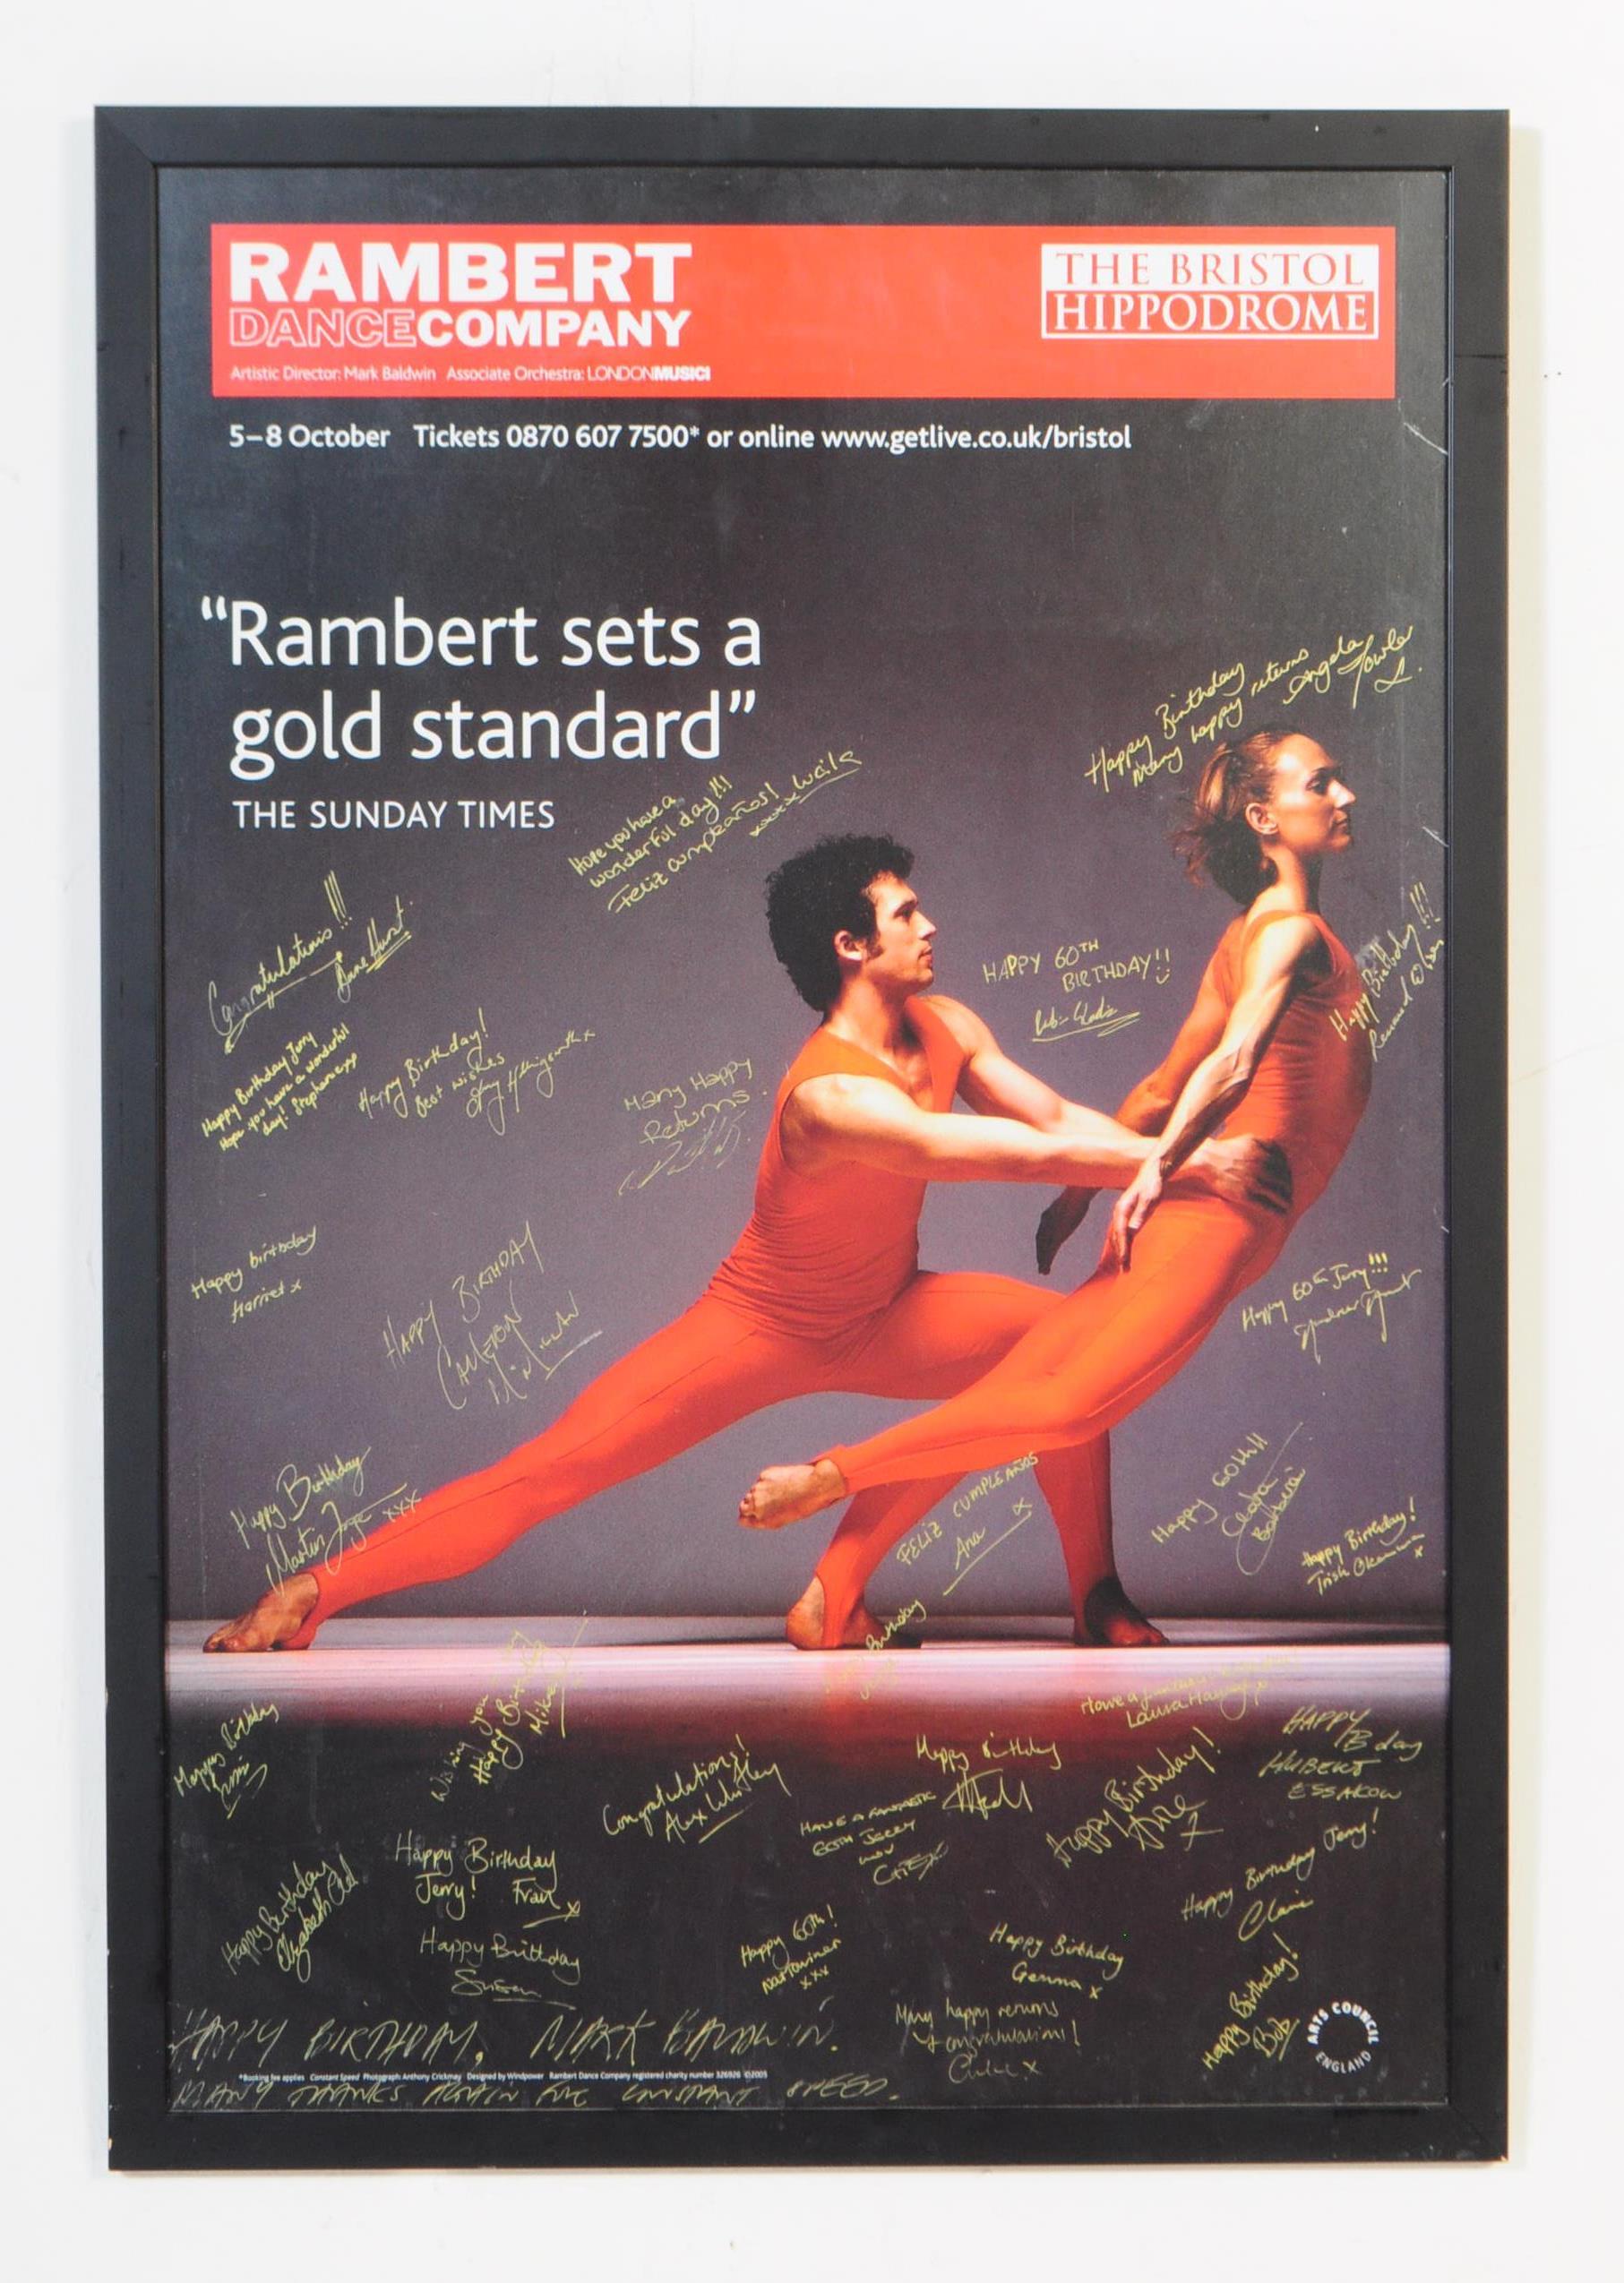 2005 SIGNED RAMBERT DANCE COMPANY BRISTOL HIPPODROME POSTER - Image 2 of 7